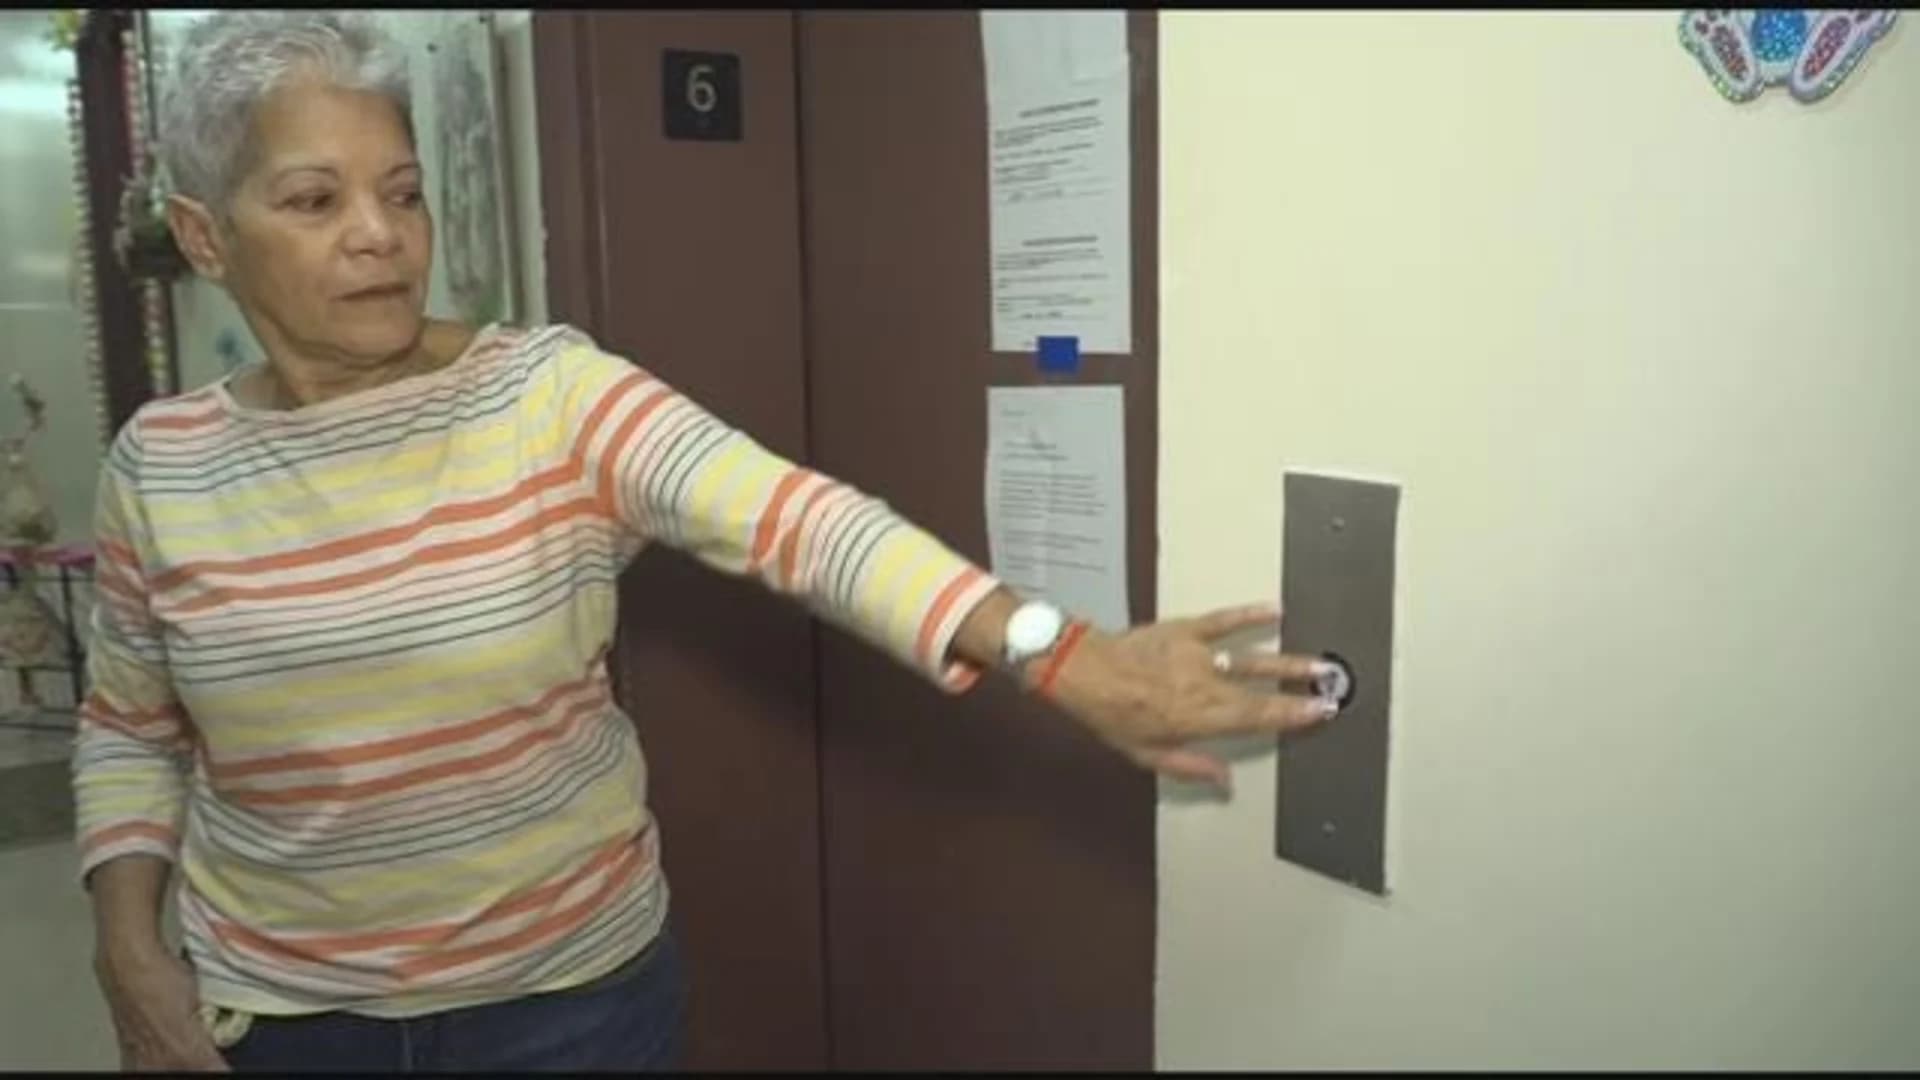 Bushwick tenants say out of order elevator has impacted everyday tasks